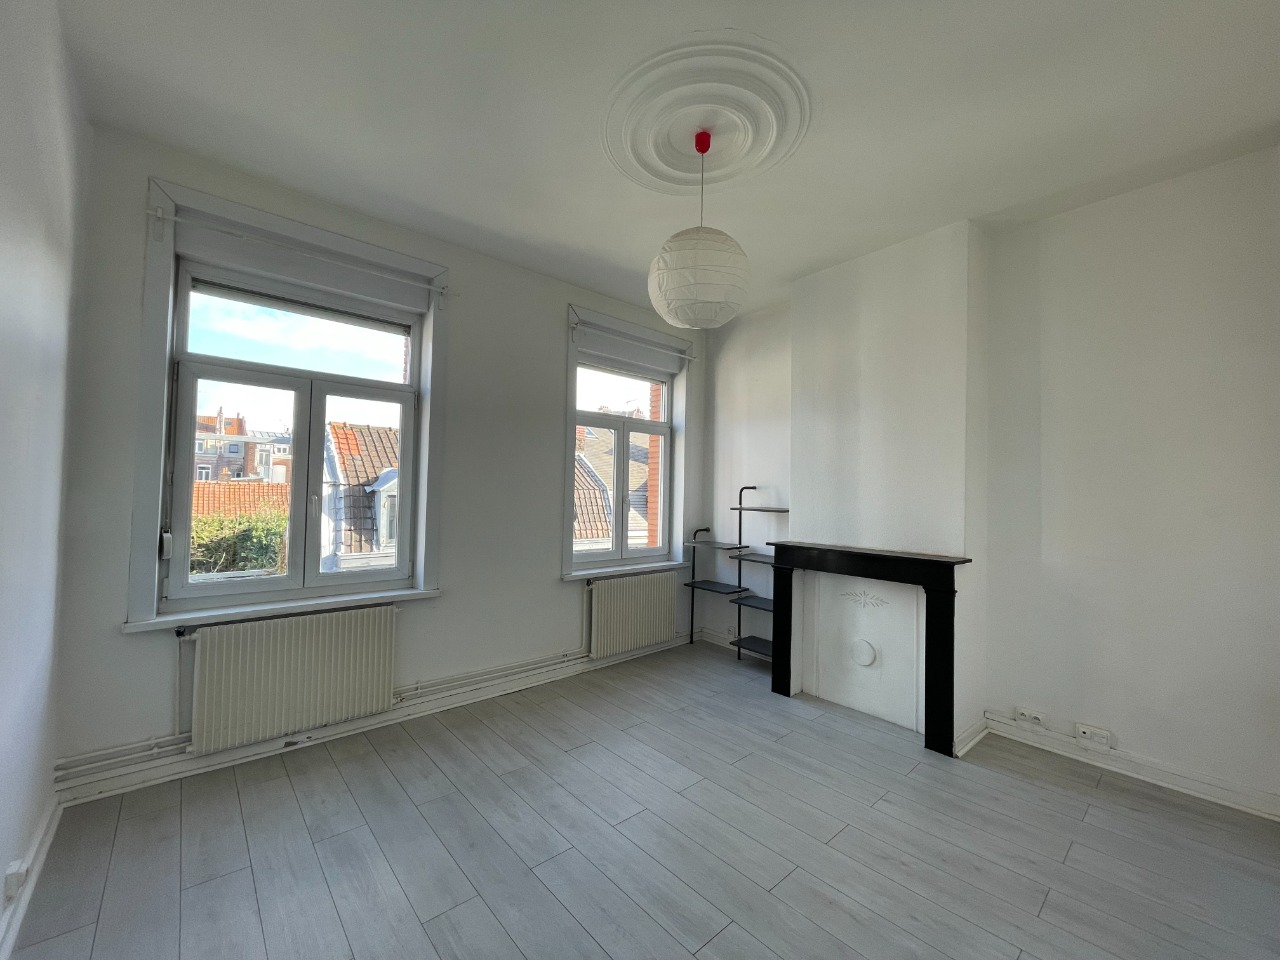 Vente appartement 59000 Lille - Gambetta - Charmant 3 pièces